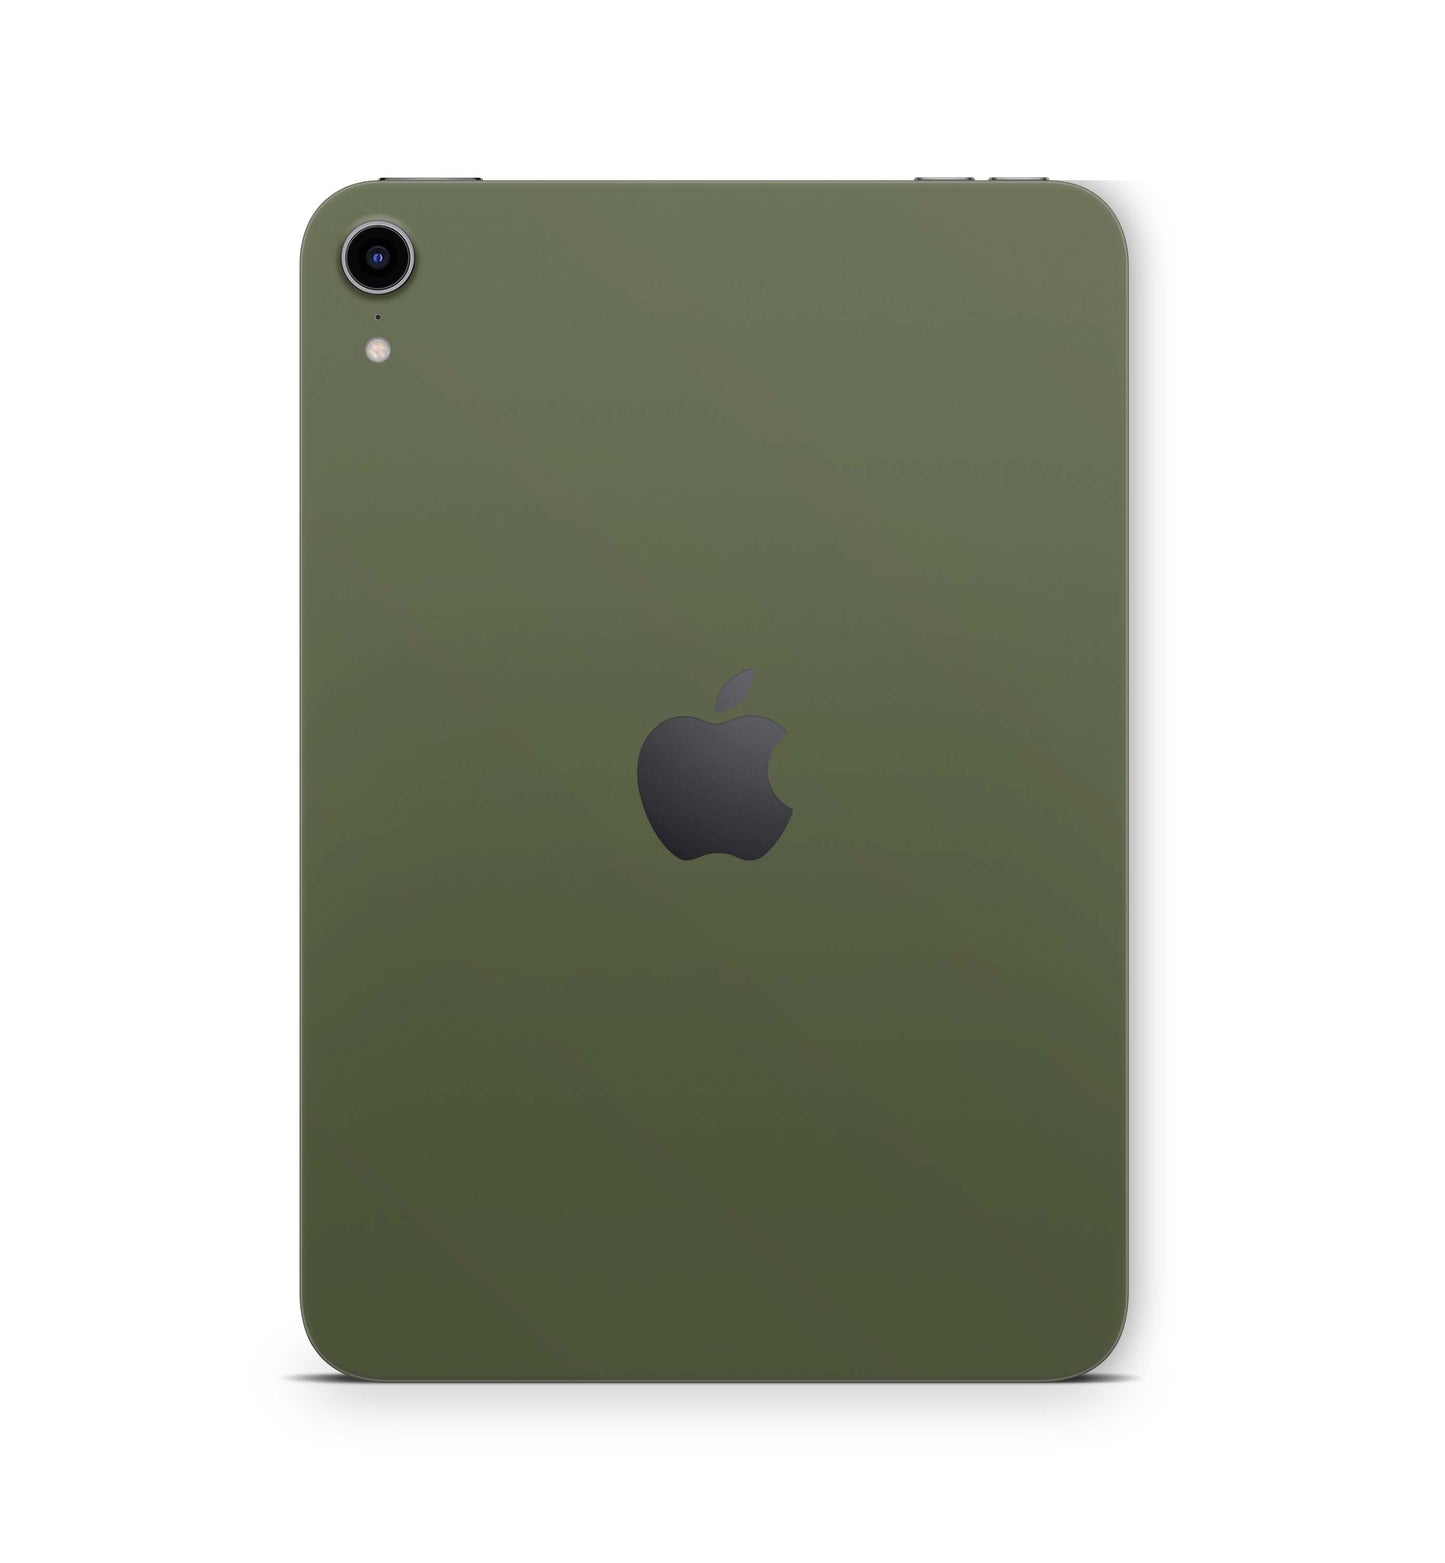 iPad Air Skin Design Cover Folie Vinyl Skins & Wraps für alle iPad Air Modelle Aufkleber Skins4u Solid-state-olive  